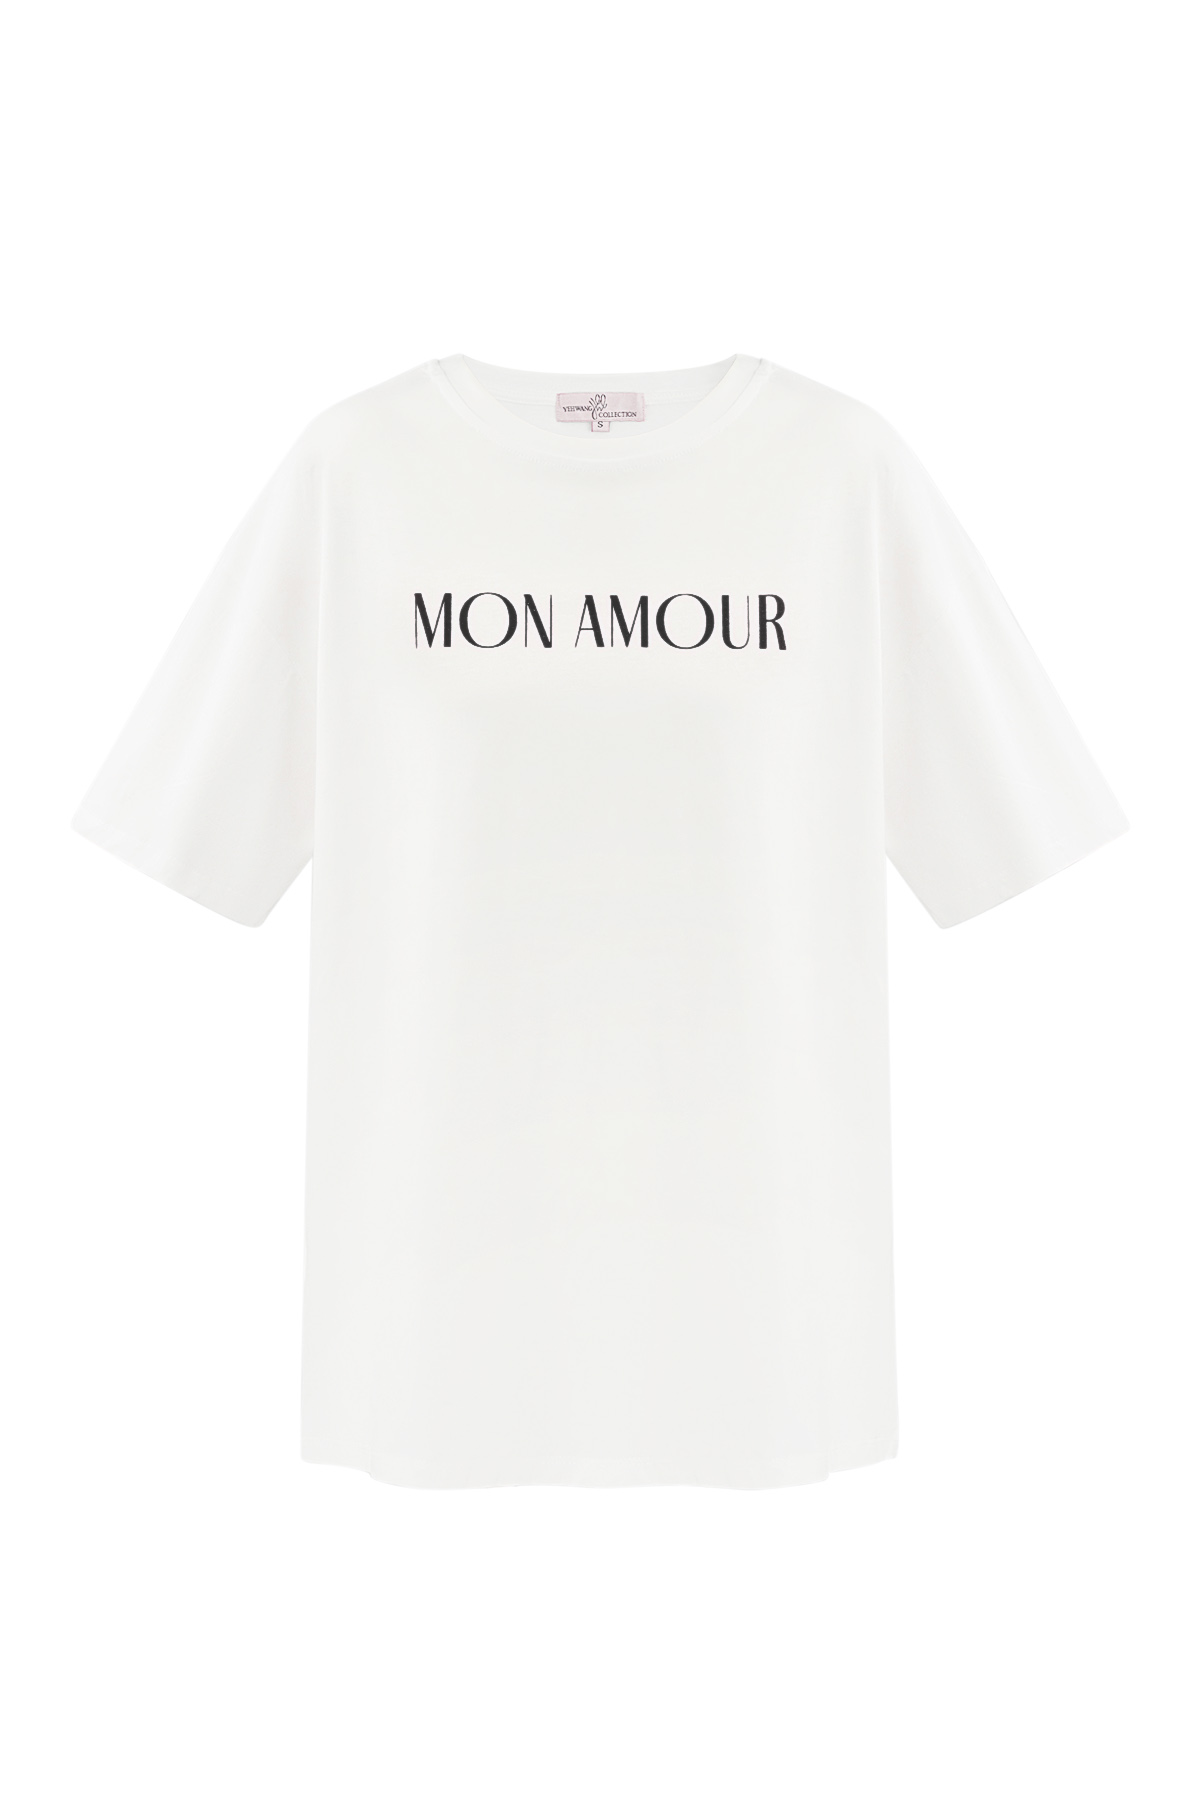 Camiseta mon amour - blanco y negro h5 